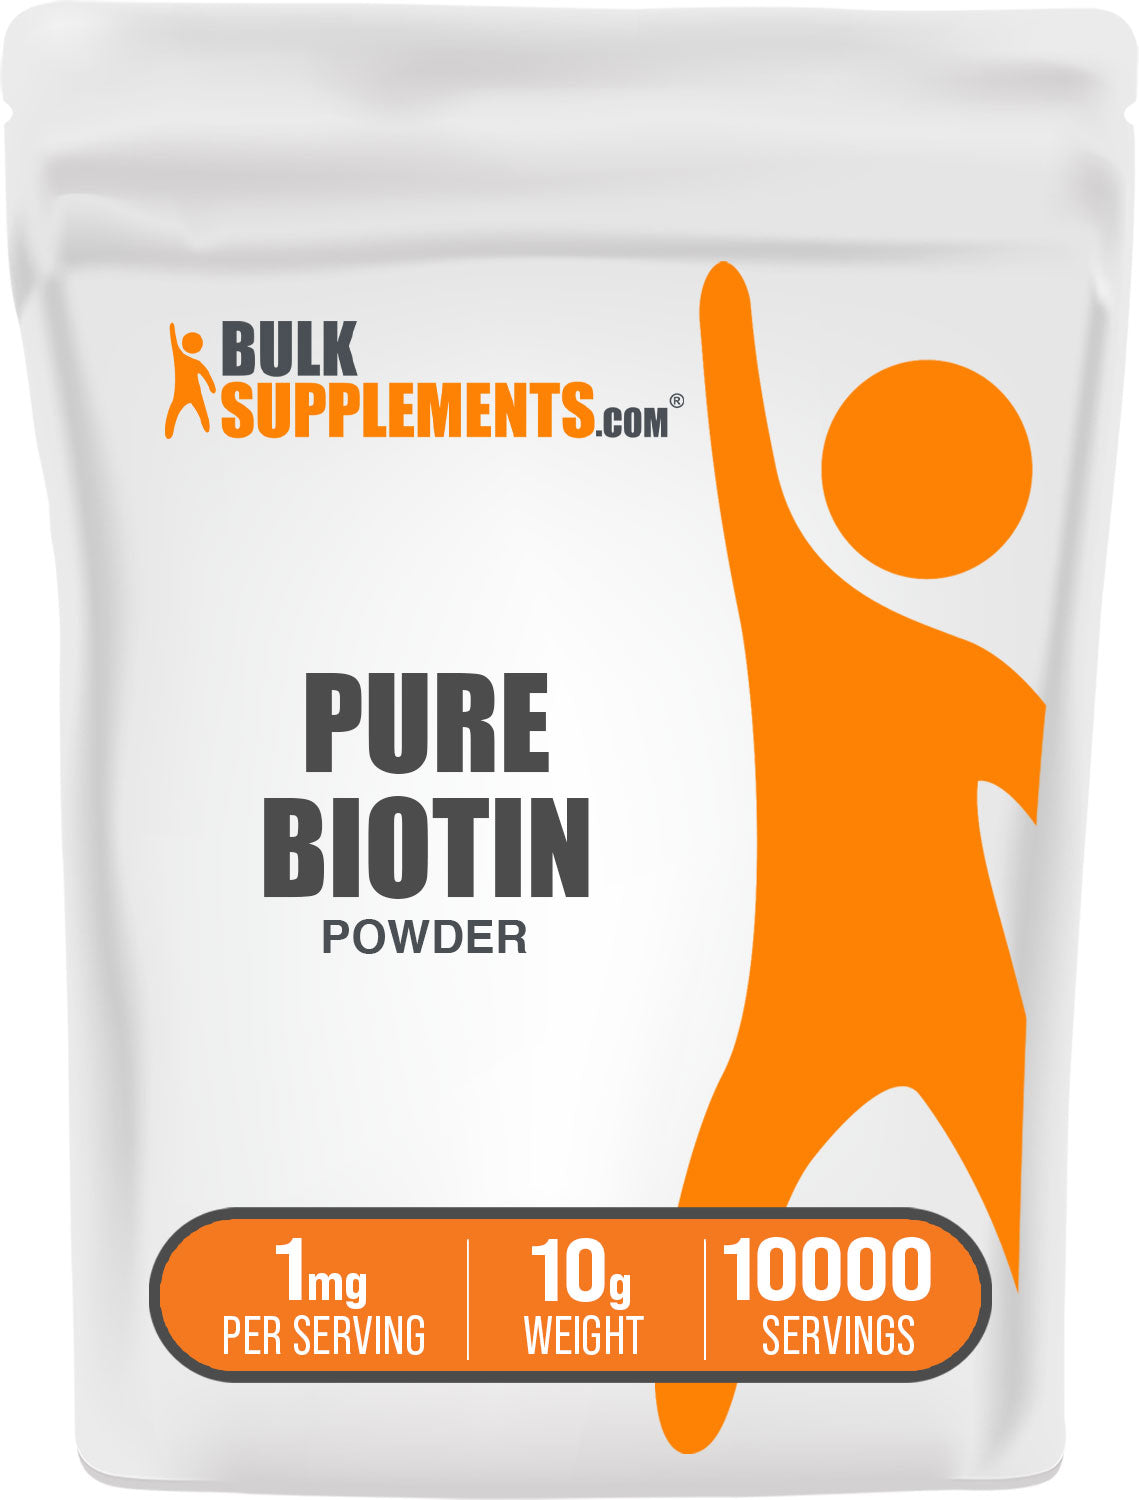 Pure Biotin Powder 10g bag